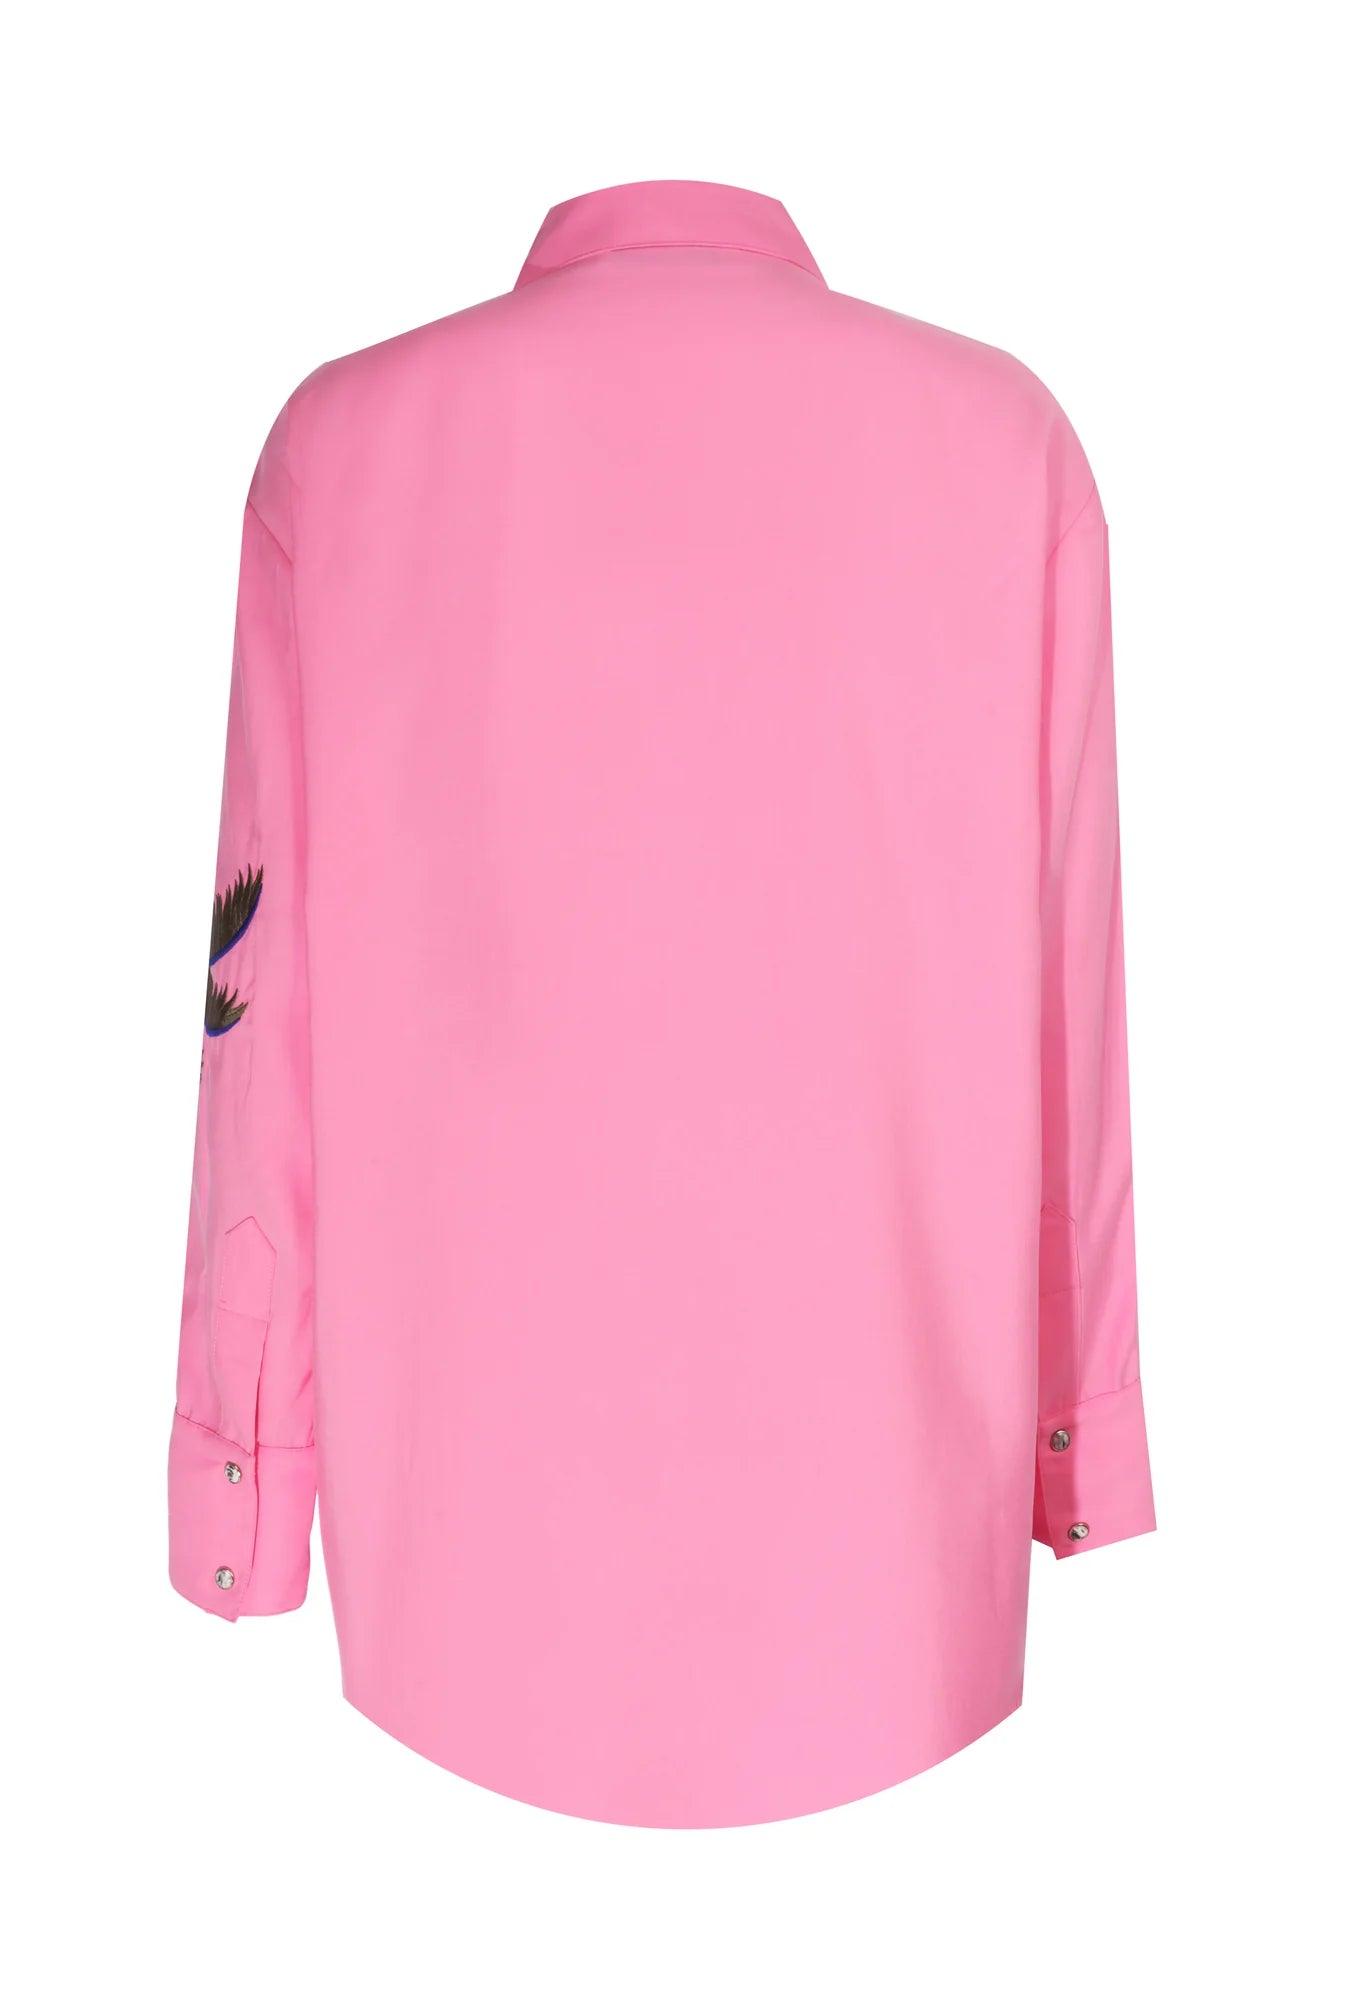 Rosy Shirt - FLTRD UAE